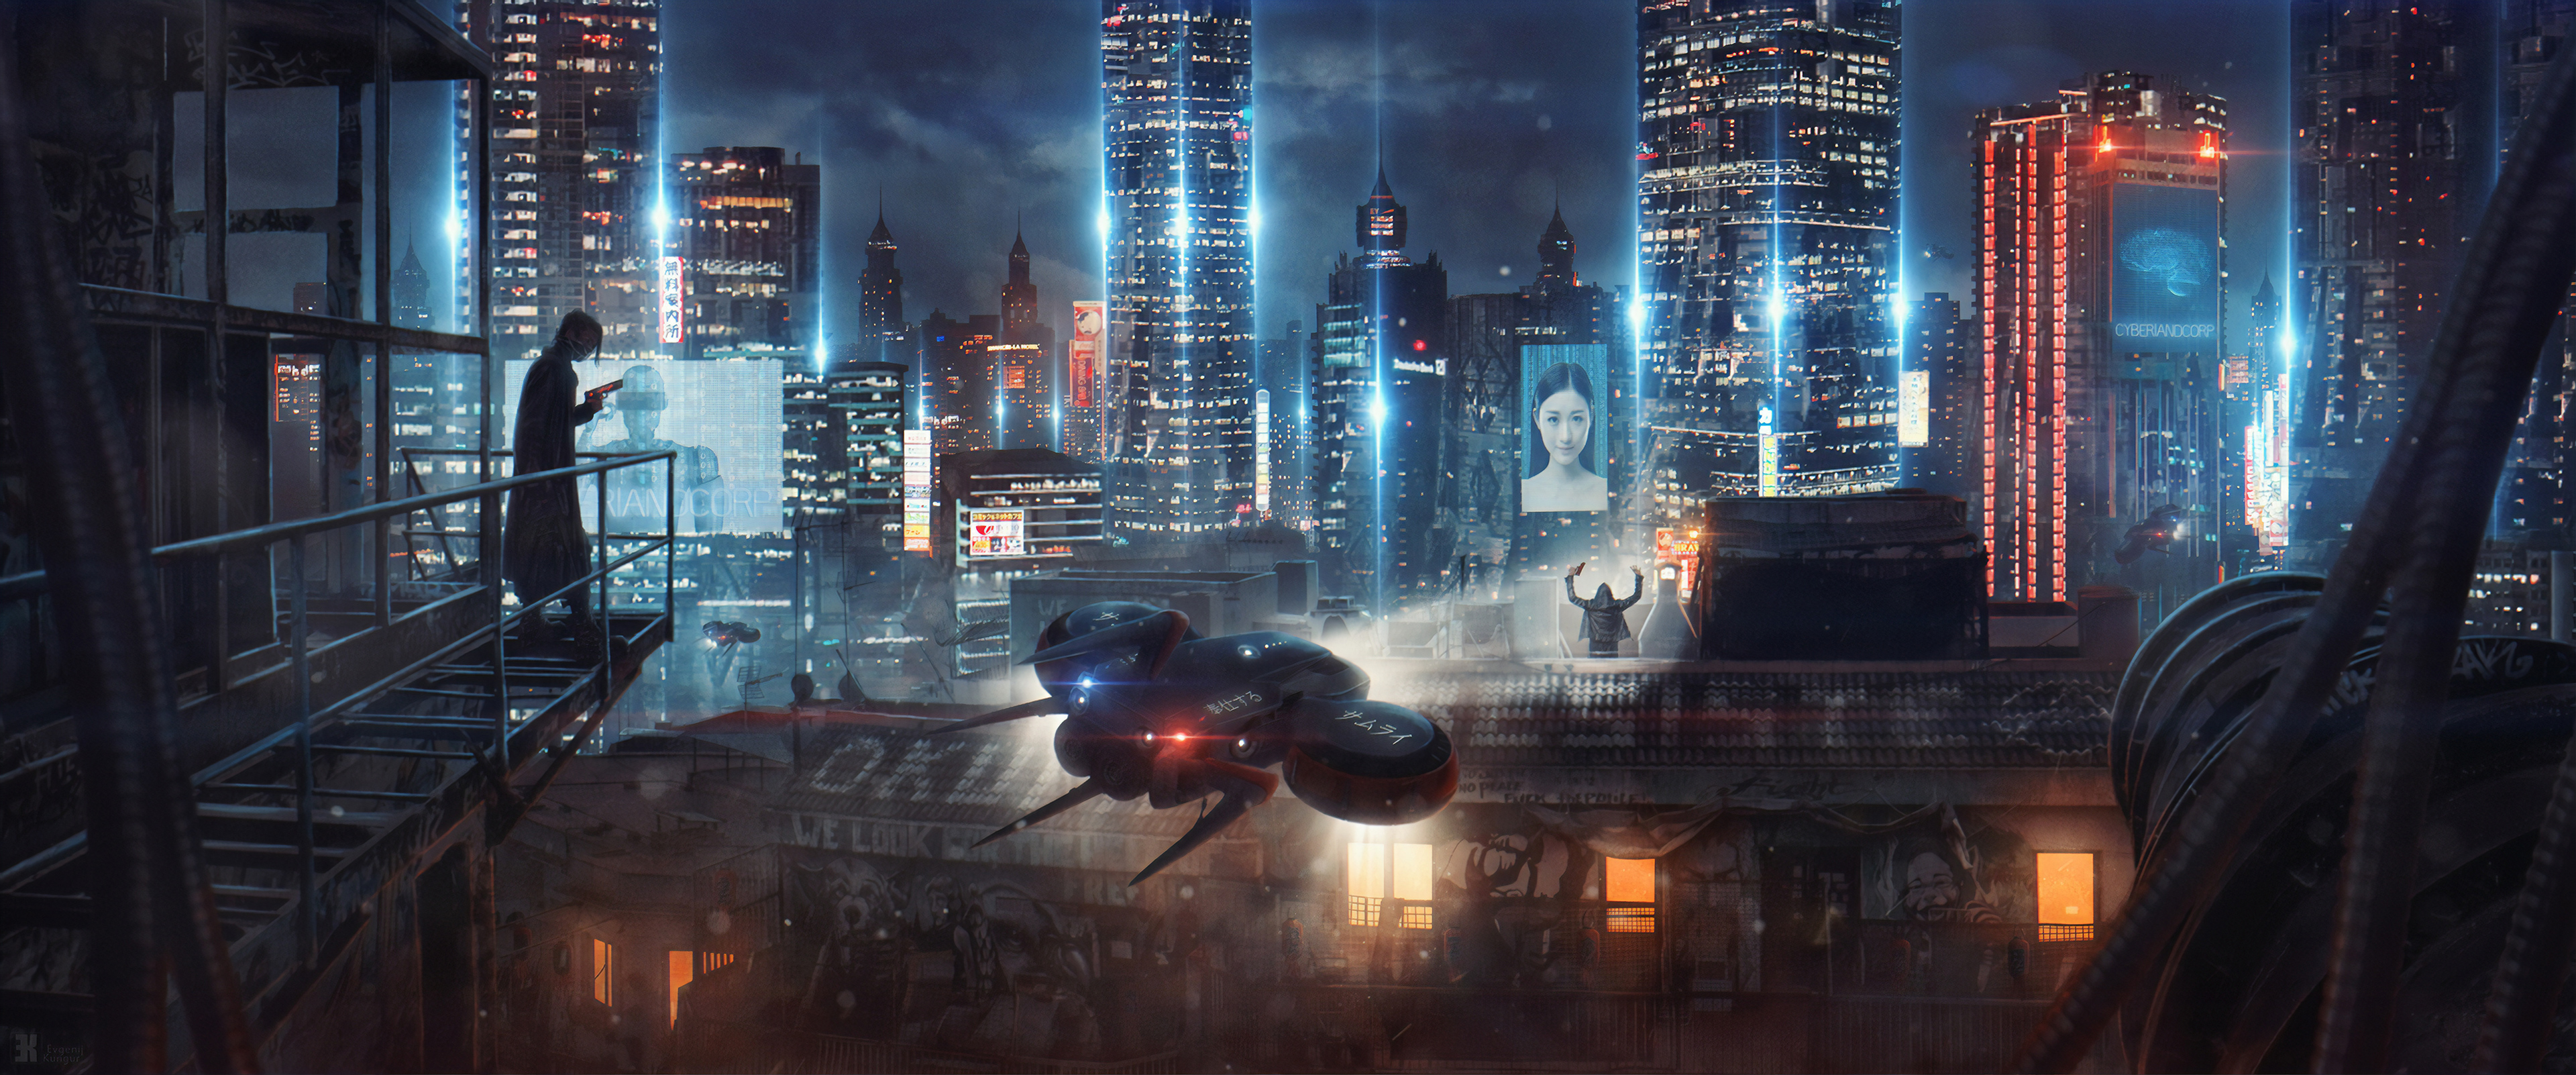 Sci Fi Cyberpunk City - HD Wallpaper 